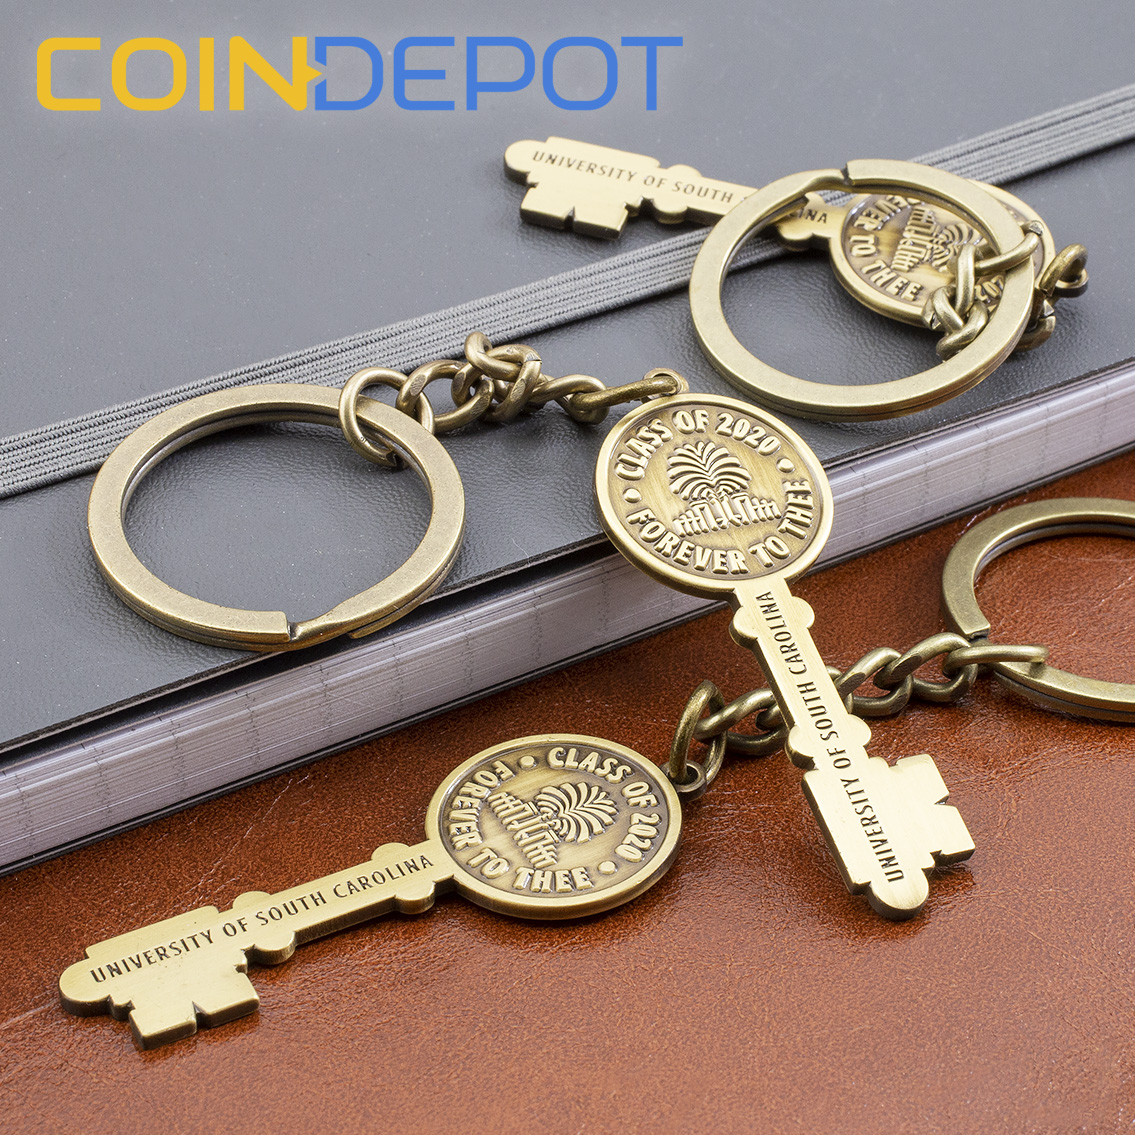 University of South Carolina Keychain by Coin Depot